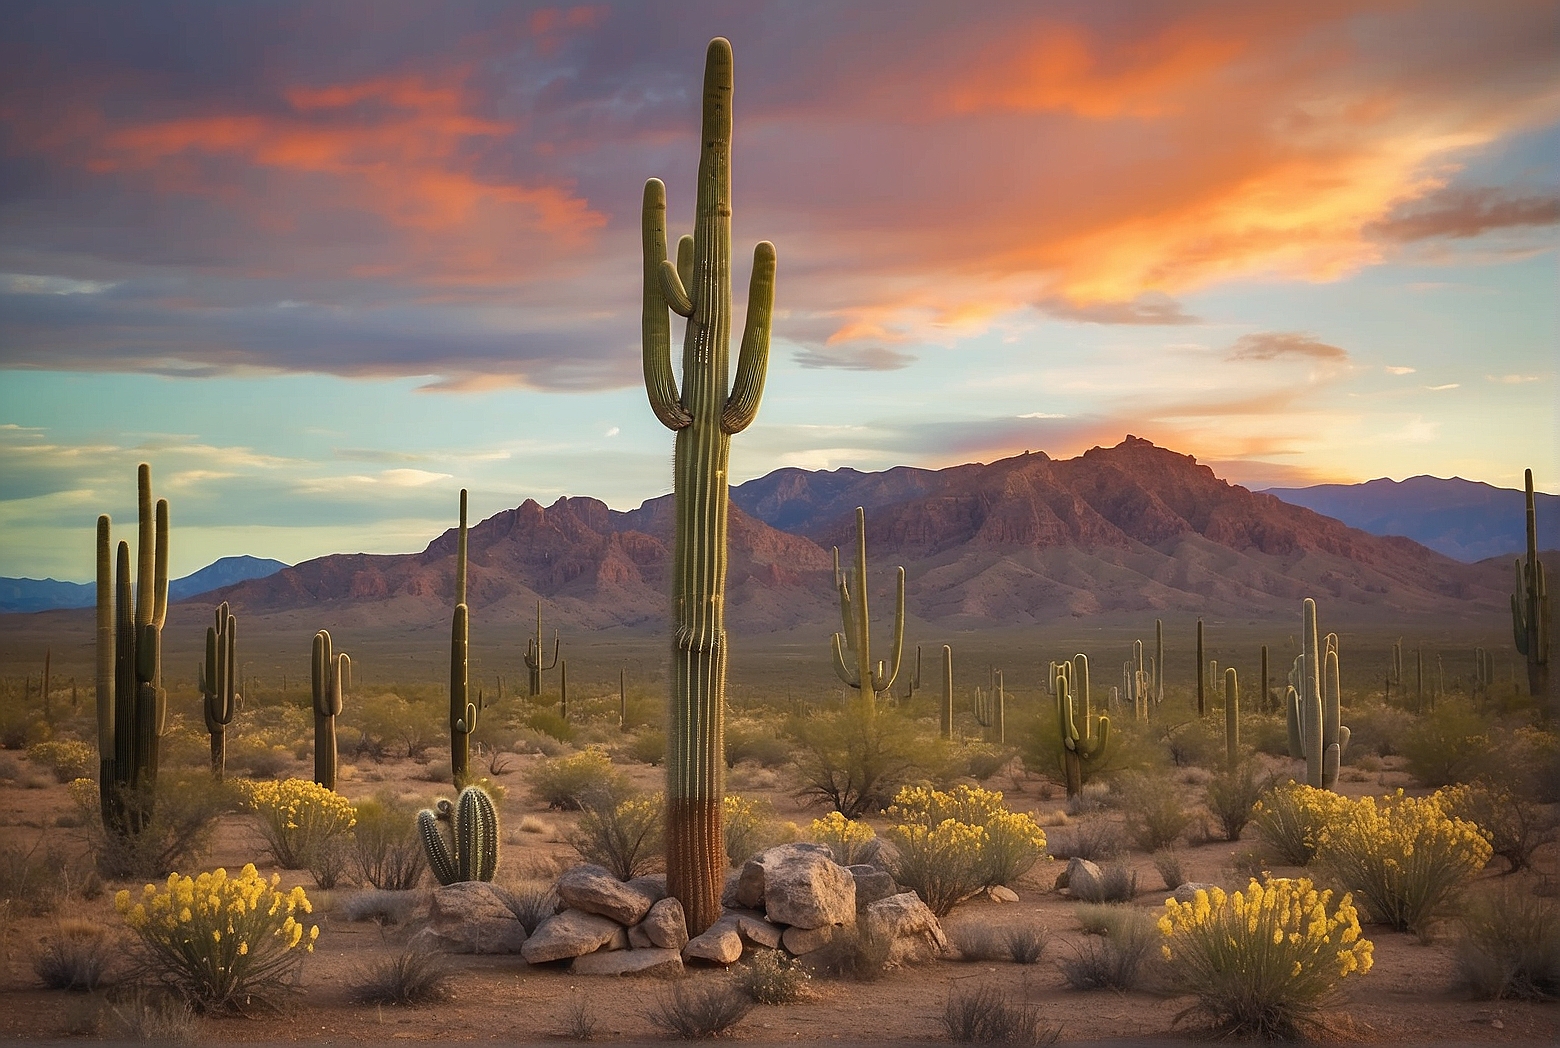 Why Do Saguaro Cactus Only Grow in Arizona